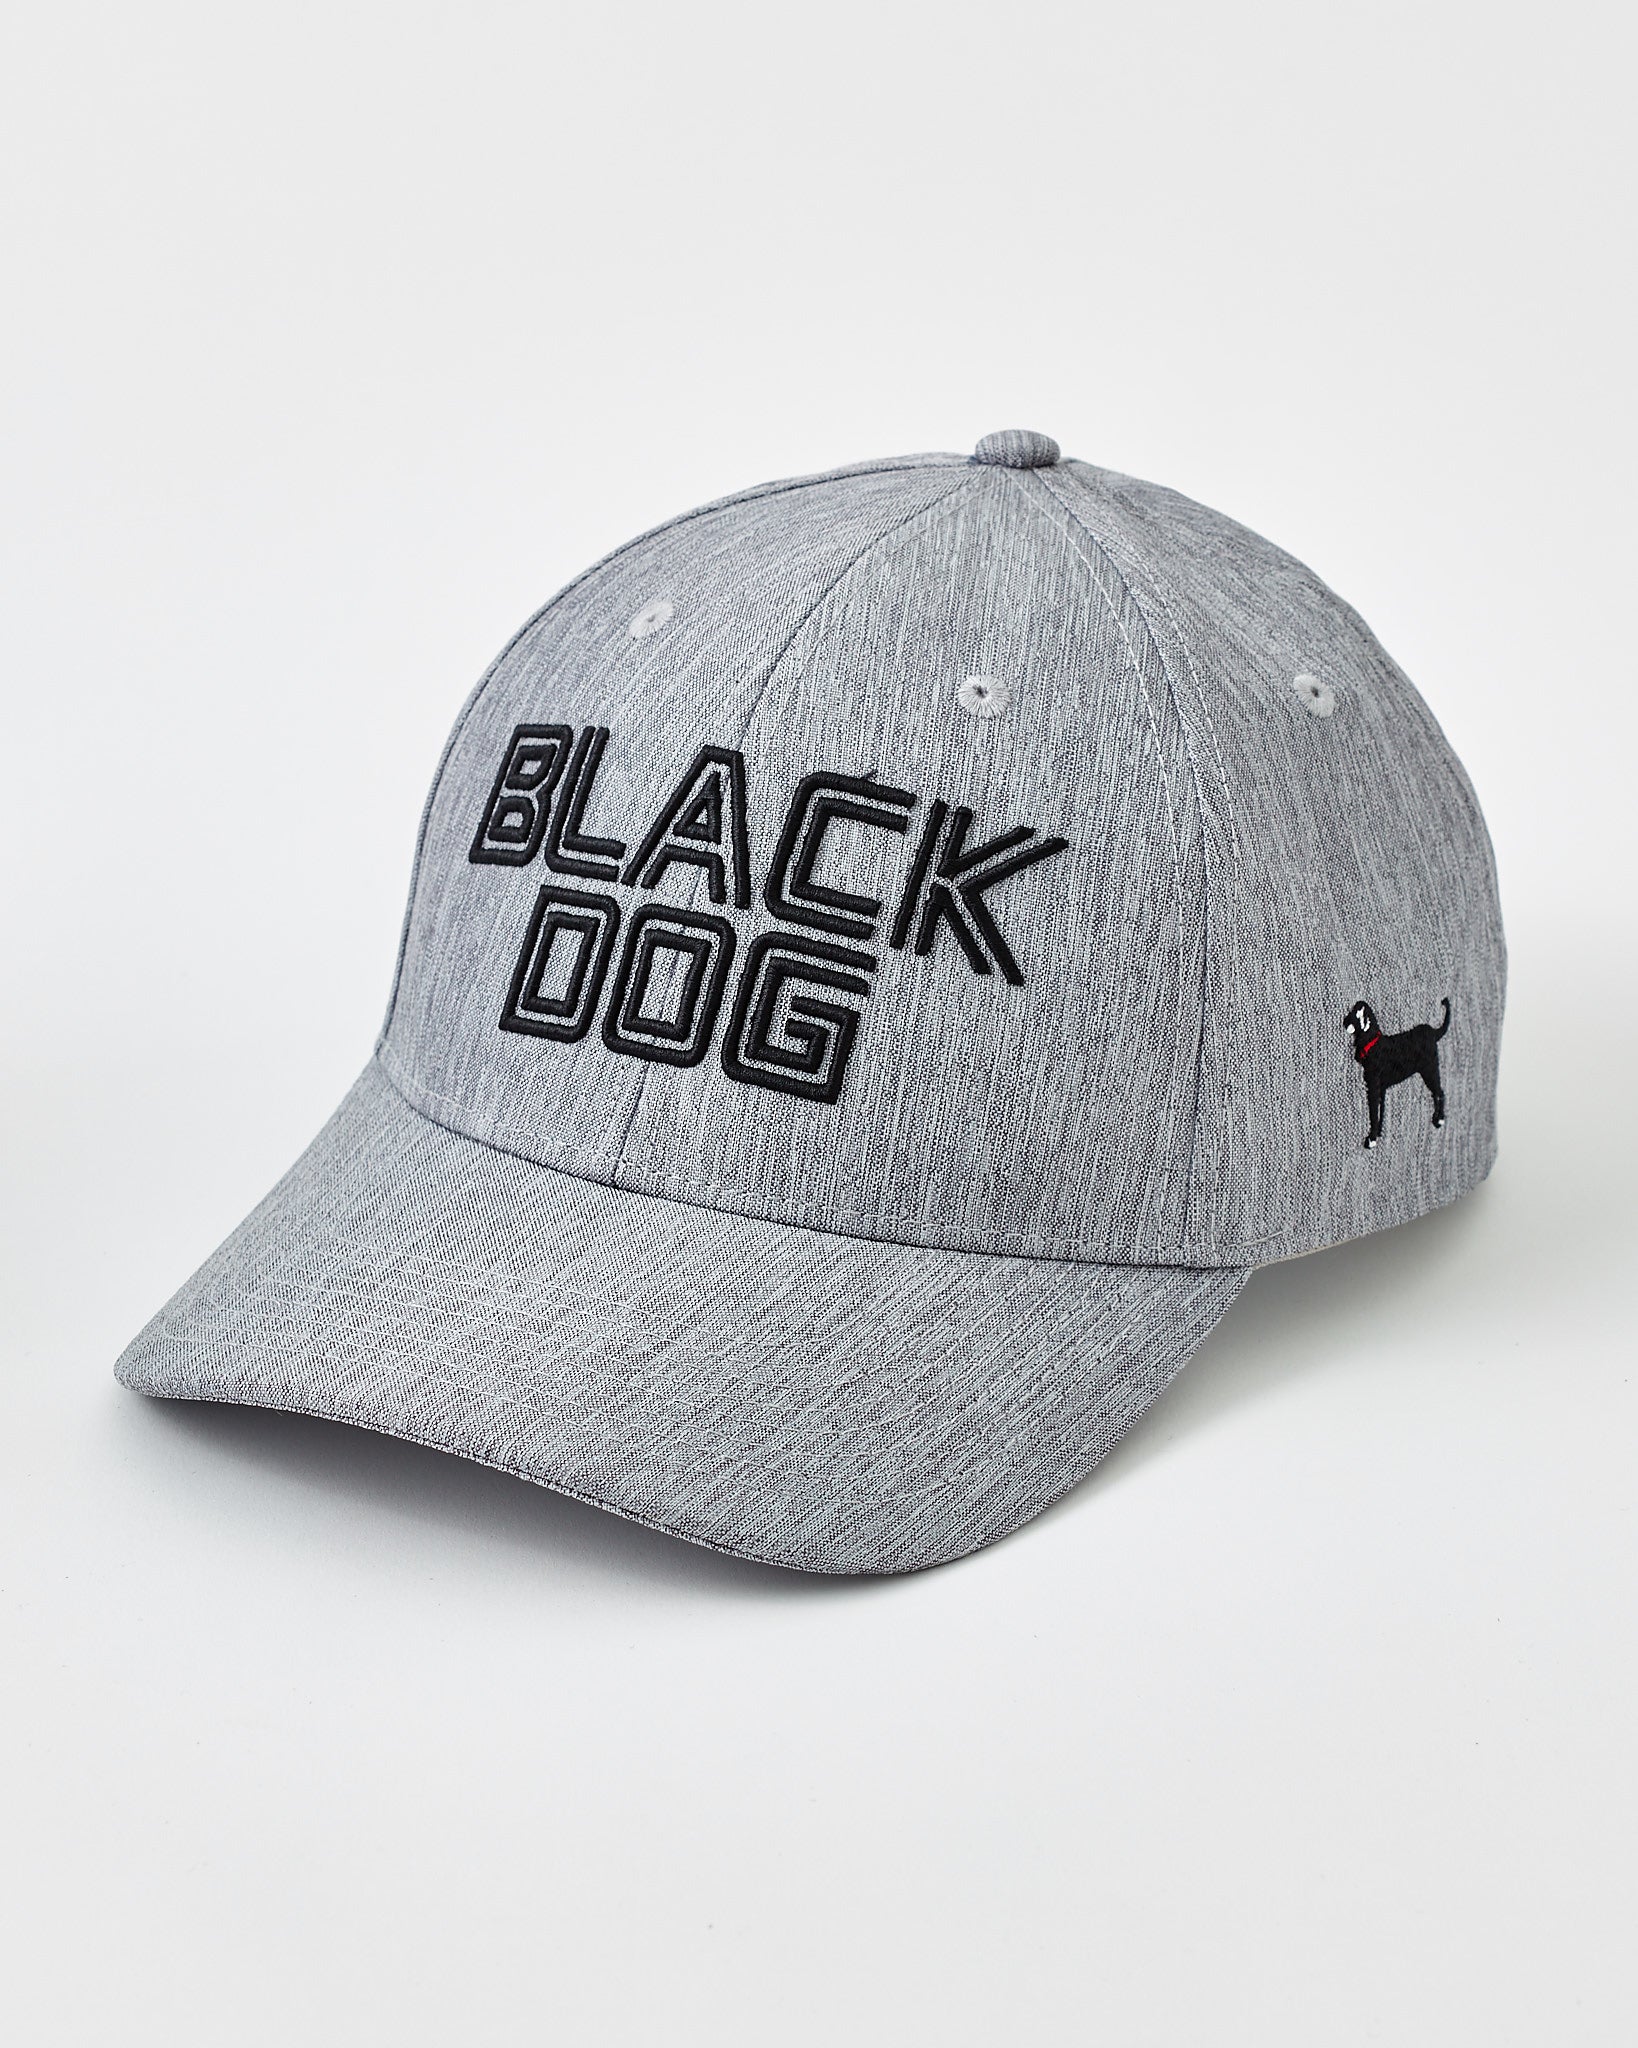 Mens Hats | The Black Dog